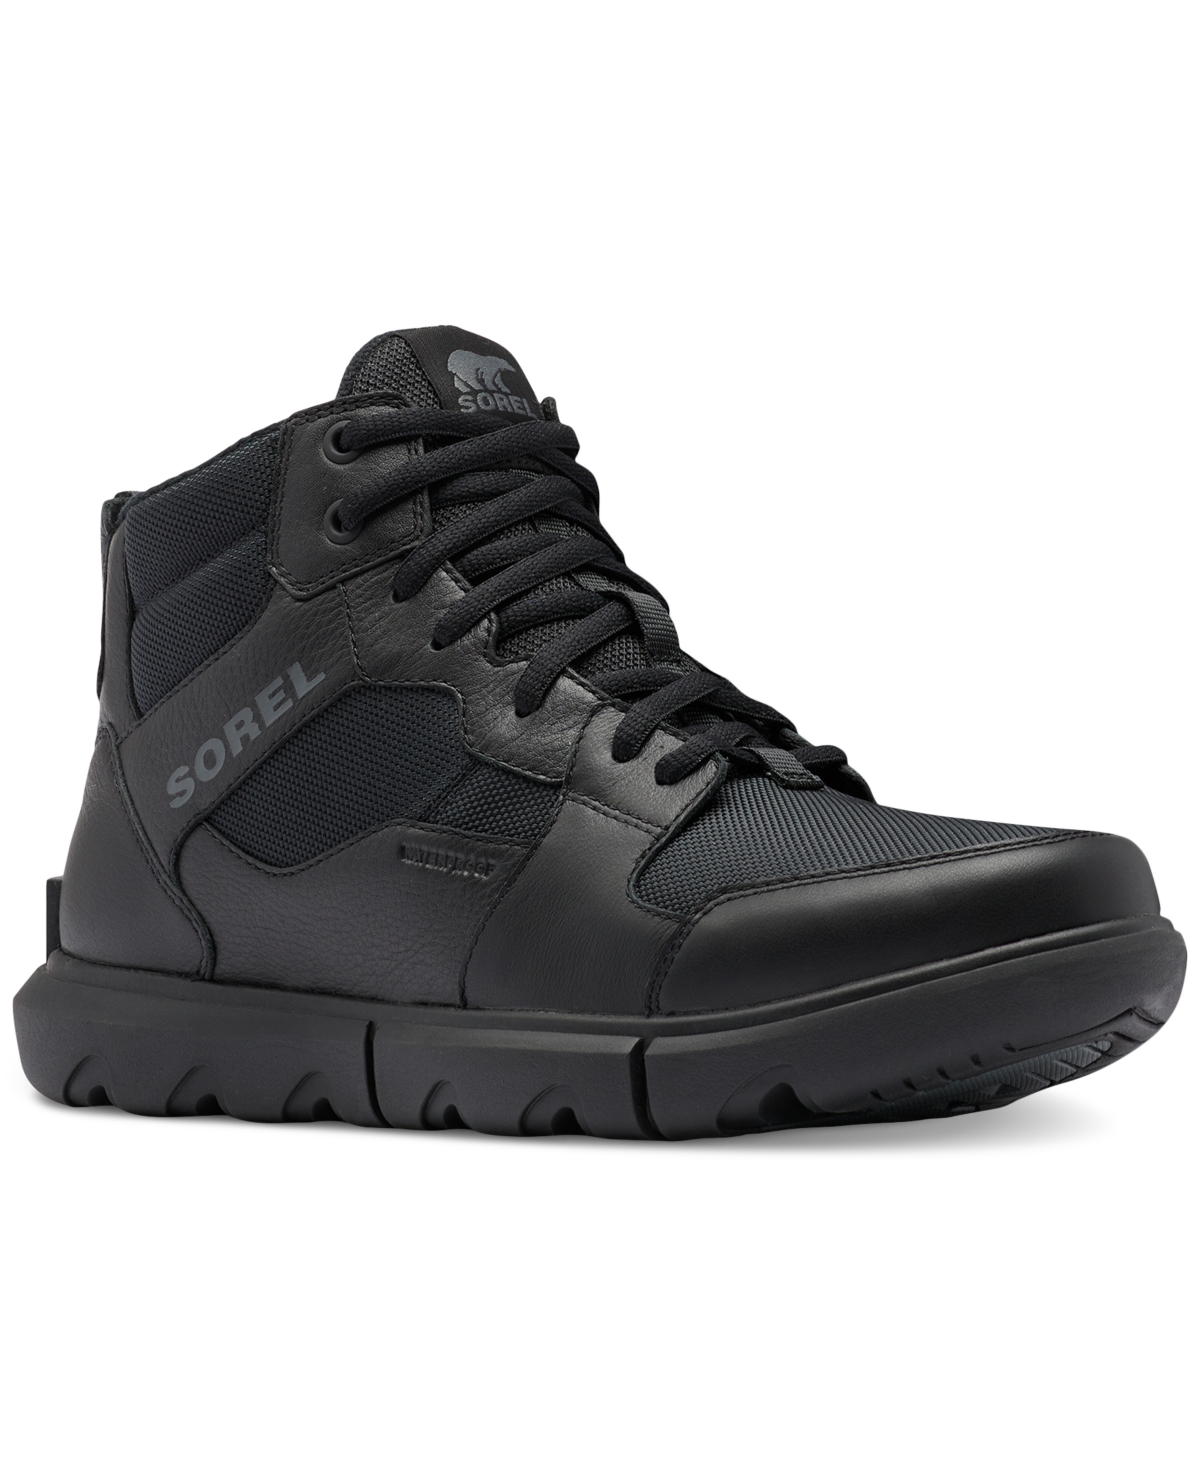 Sorel Men's Explorer Waterproof High Top Sneakers - 150th Anniversary Exclusive In Black,black